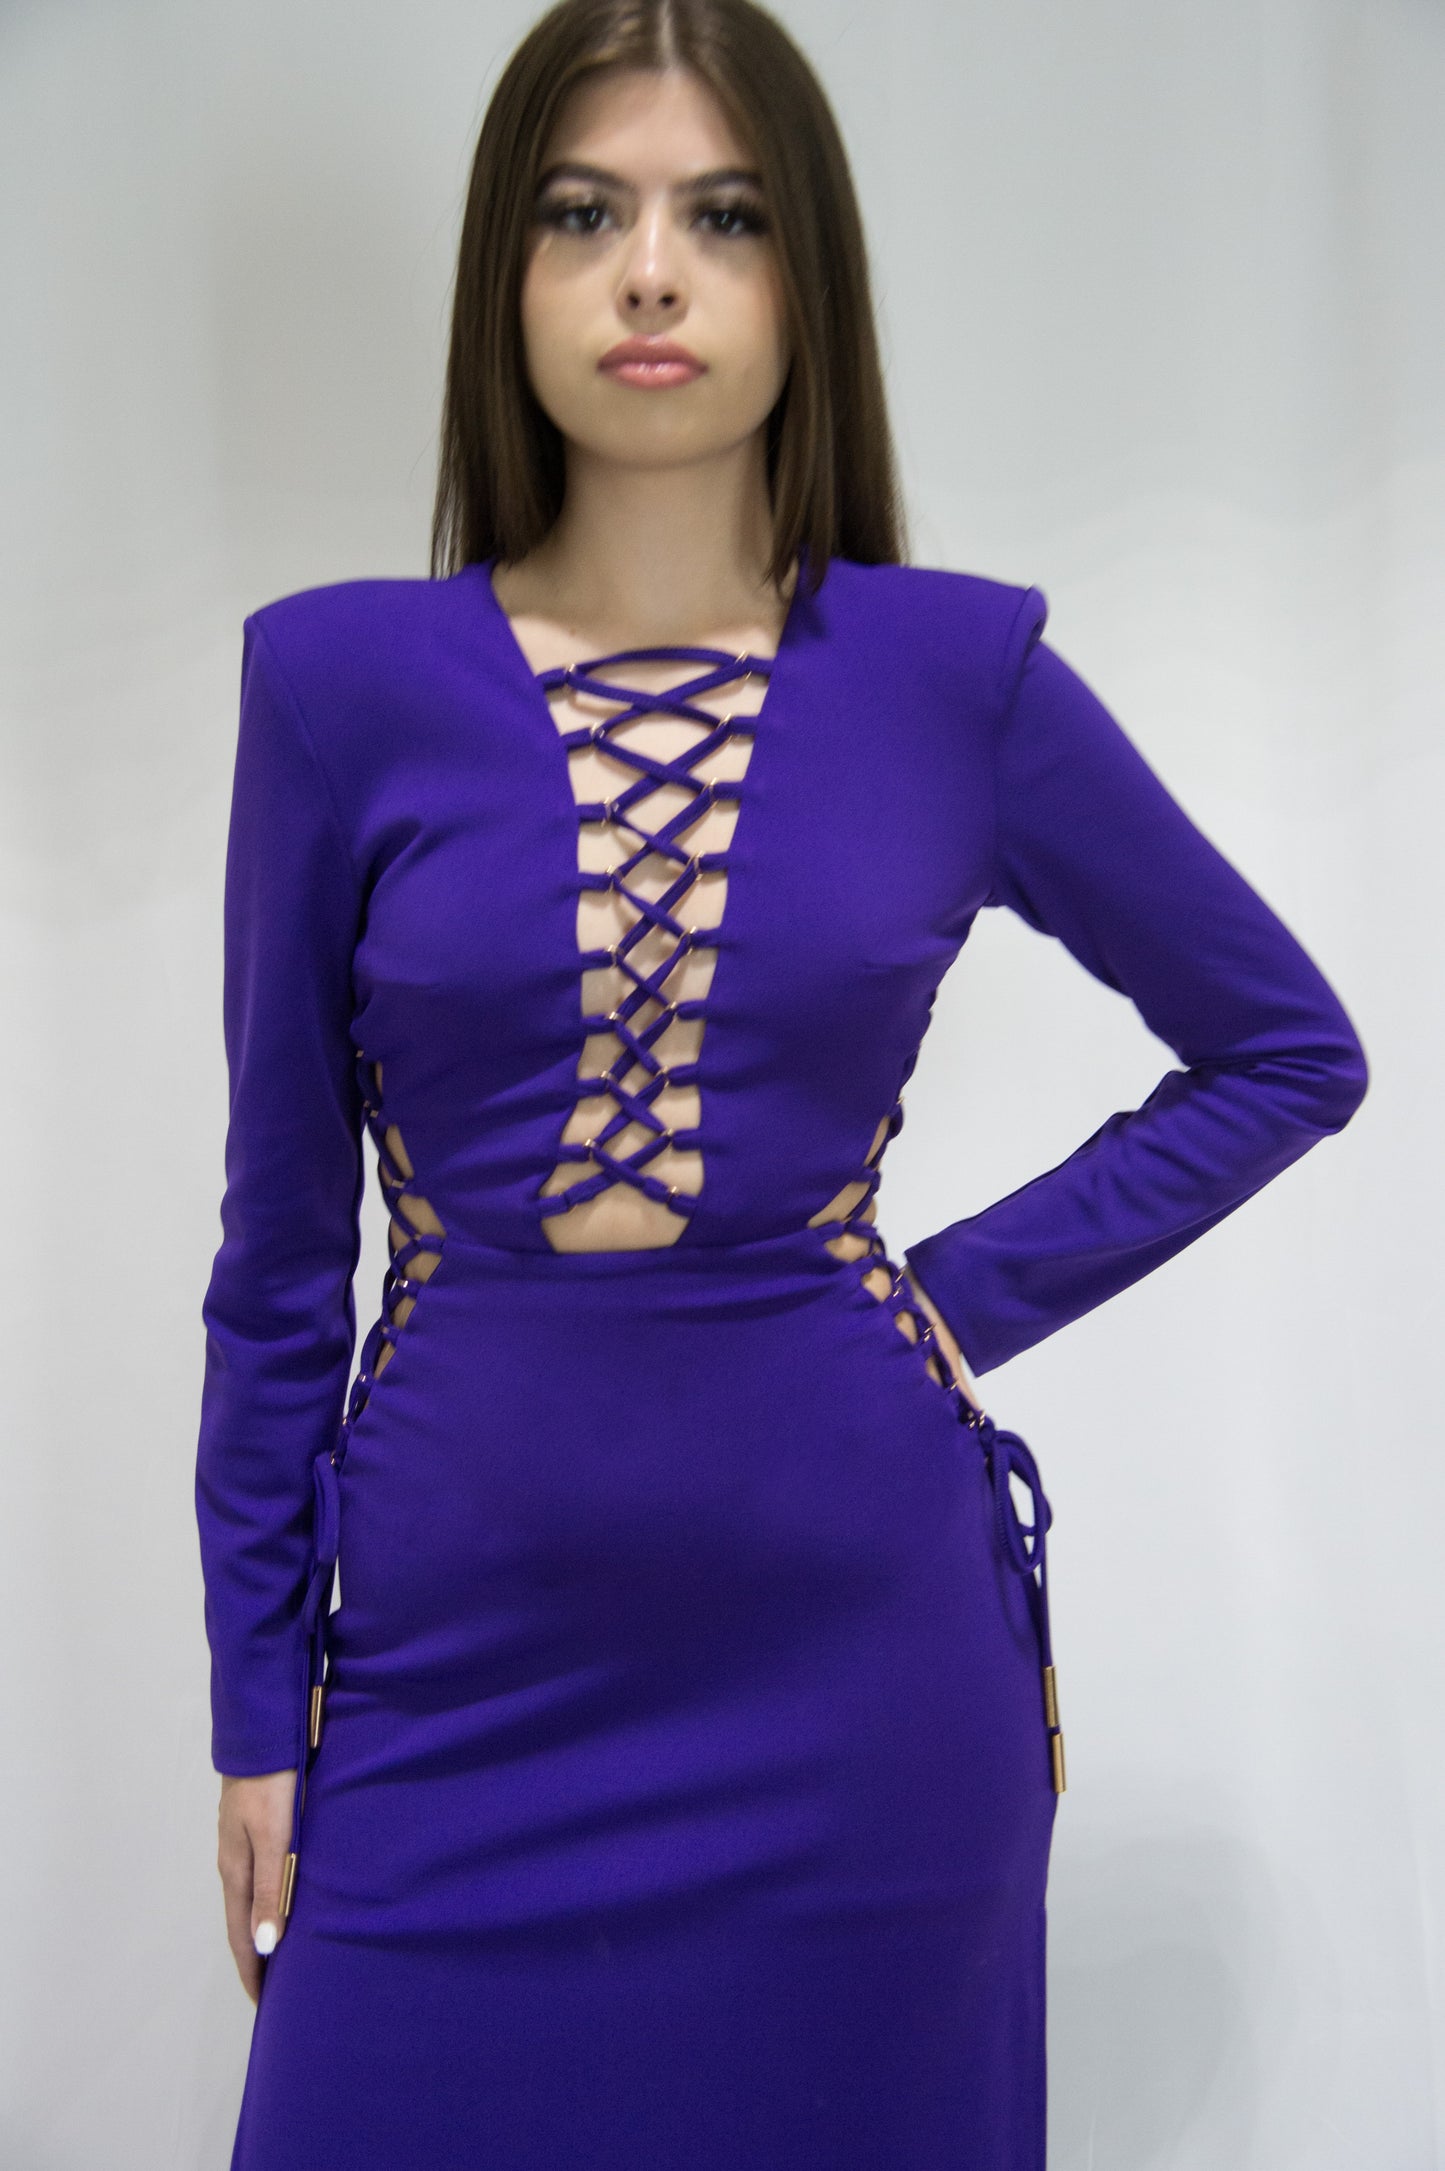 Elite Purple Dress